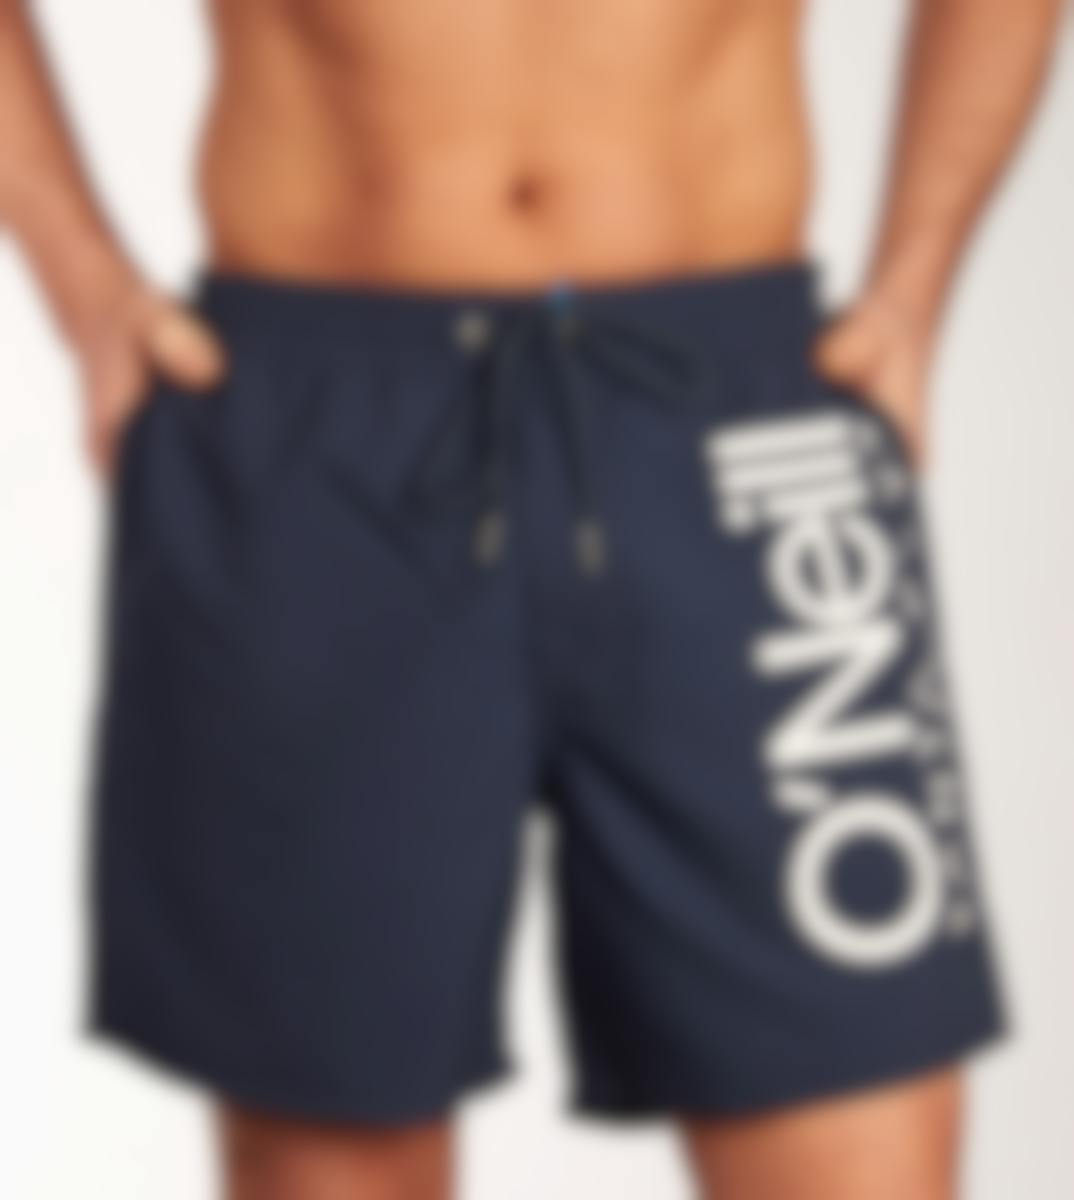 O'Neill zwemshort Pm Original Cali Shorts H